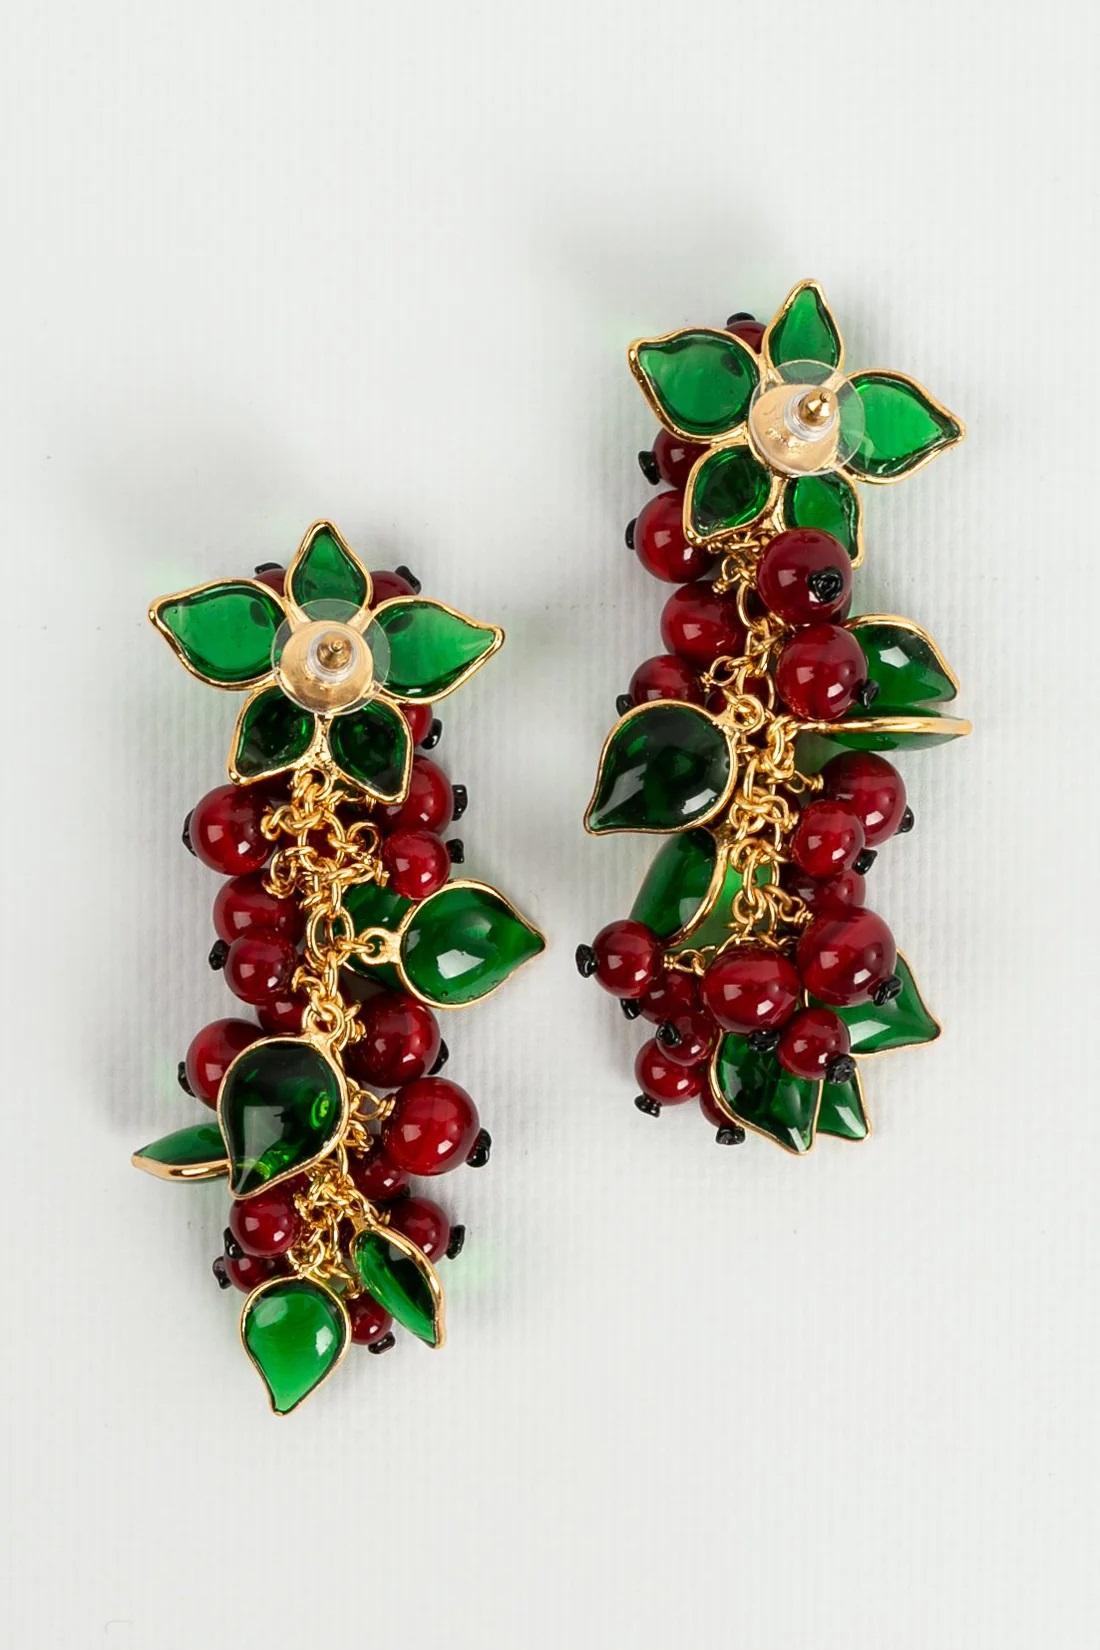 Artist Augustine Gilded Metal & Glass Paste Gooseberries Earrings For Sale